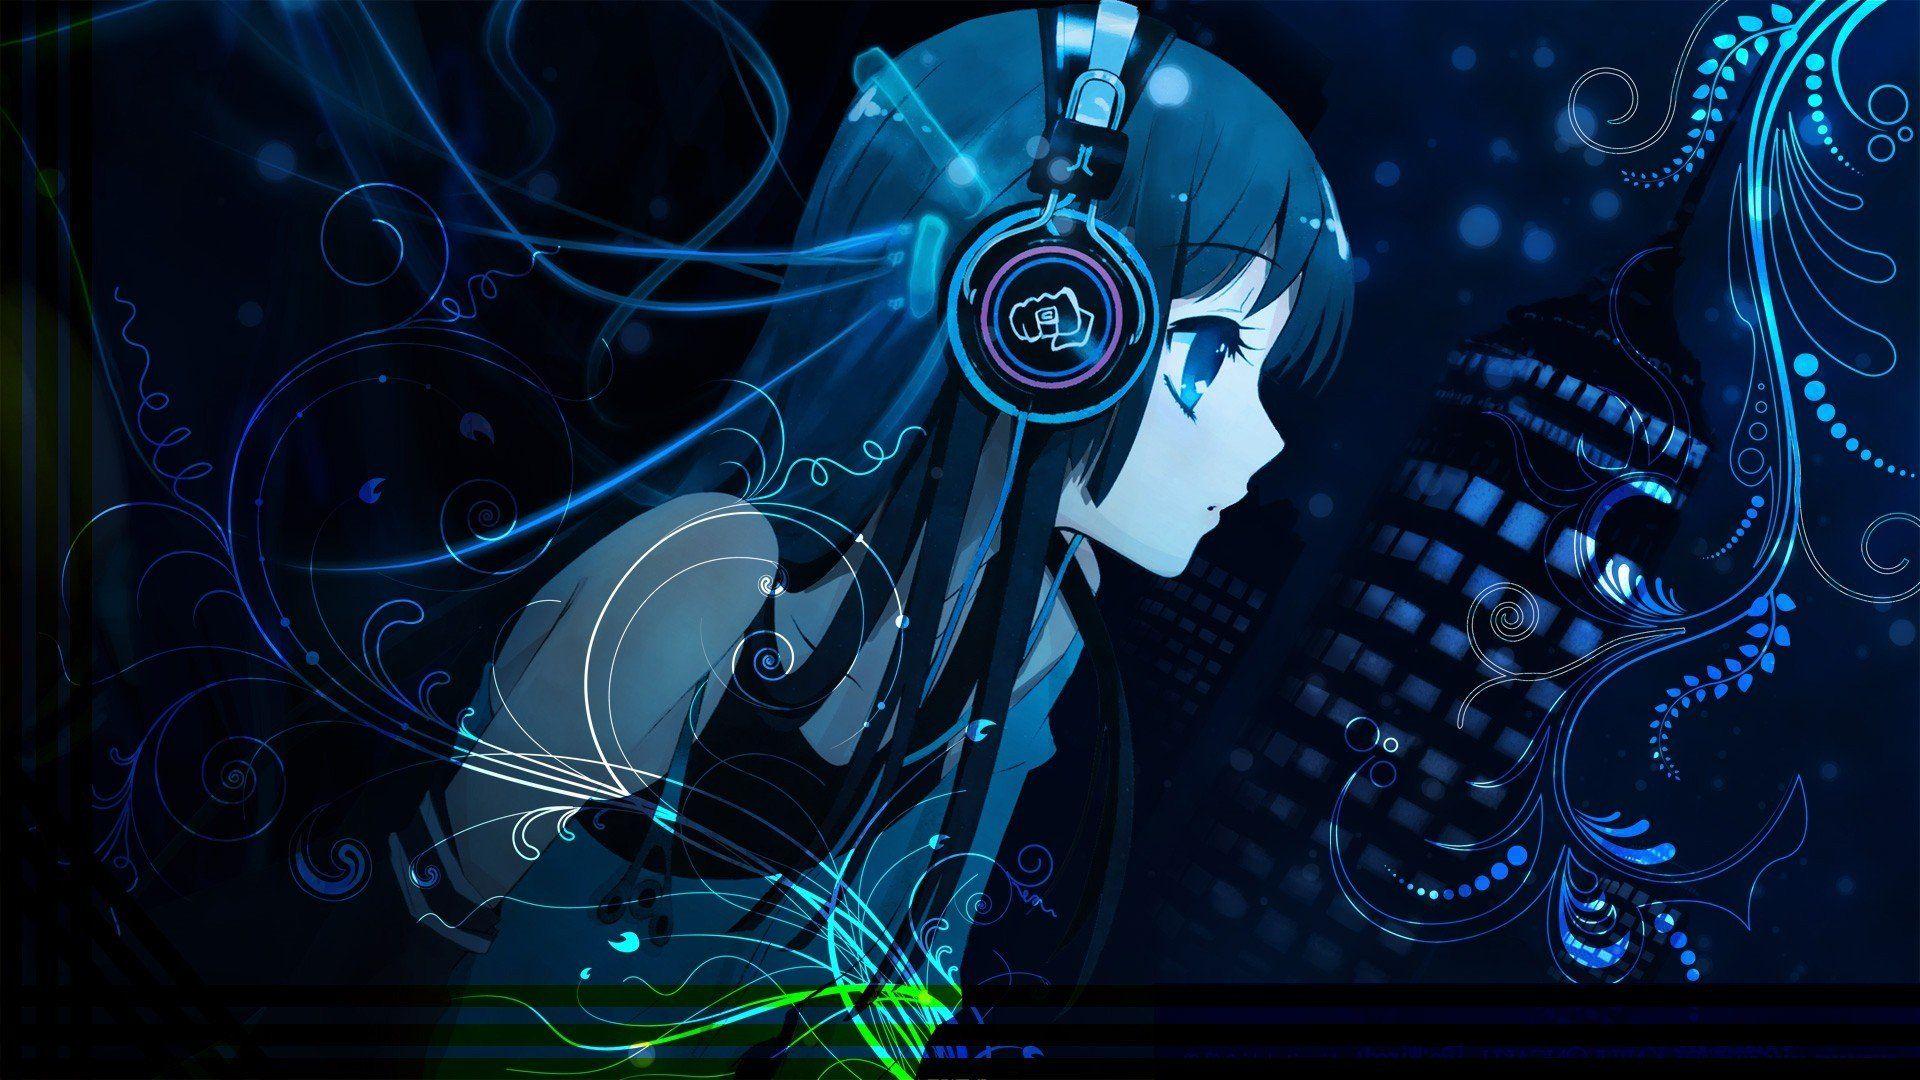 Nightcore Wallpaper HD. Dubstep EDM In 2019. Anime Music